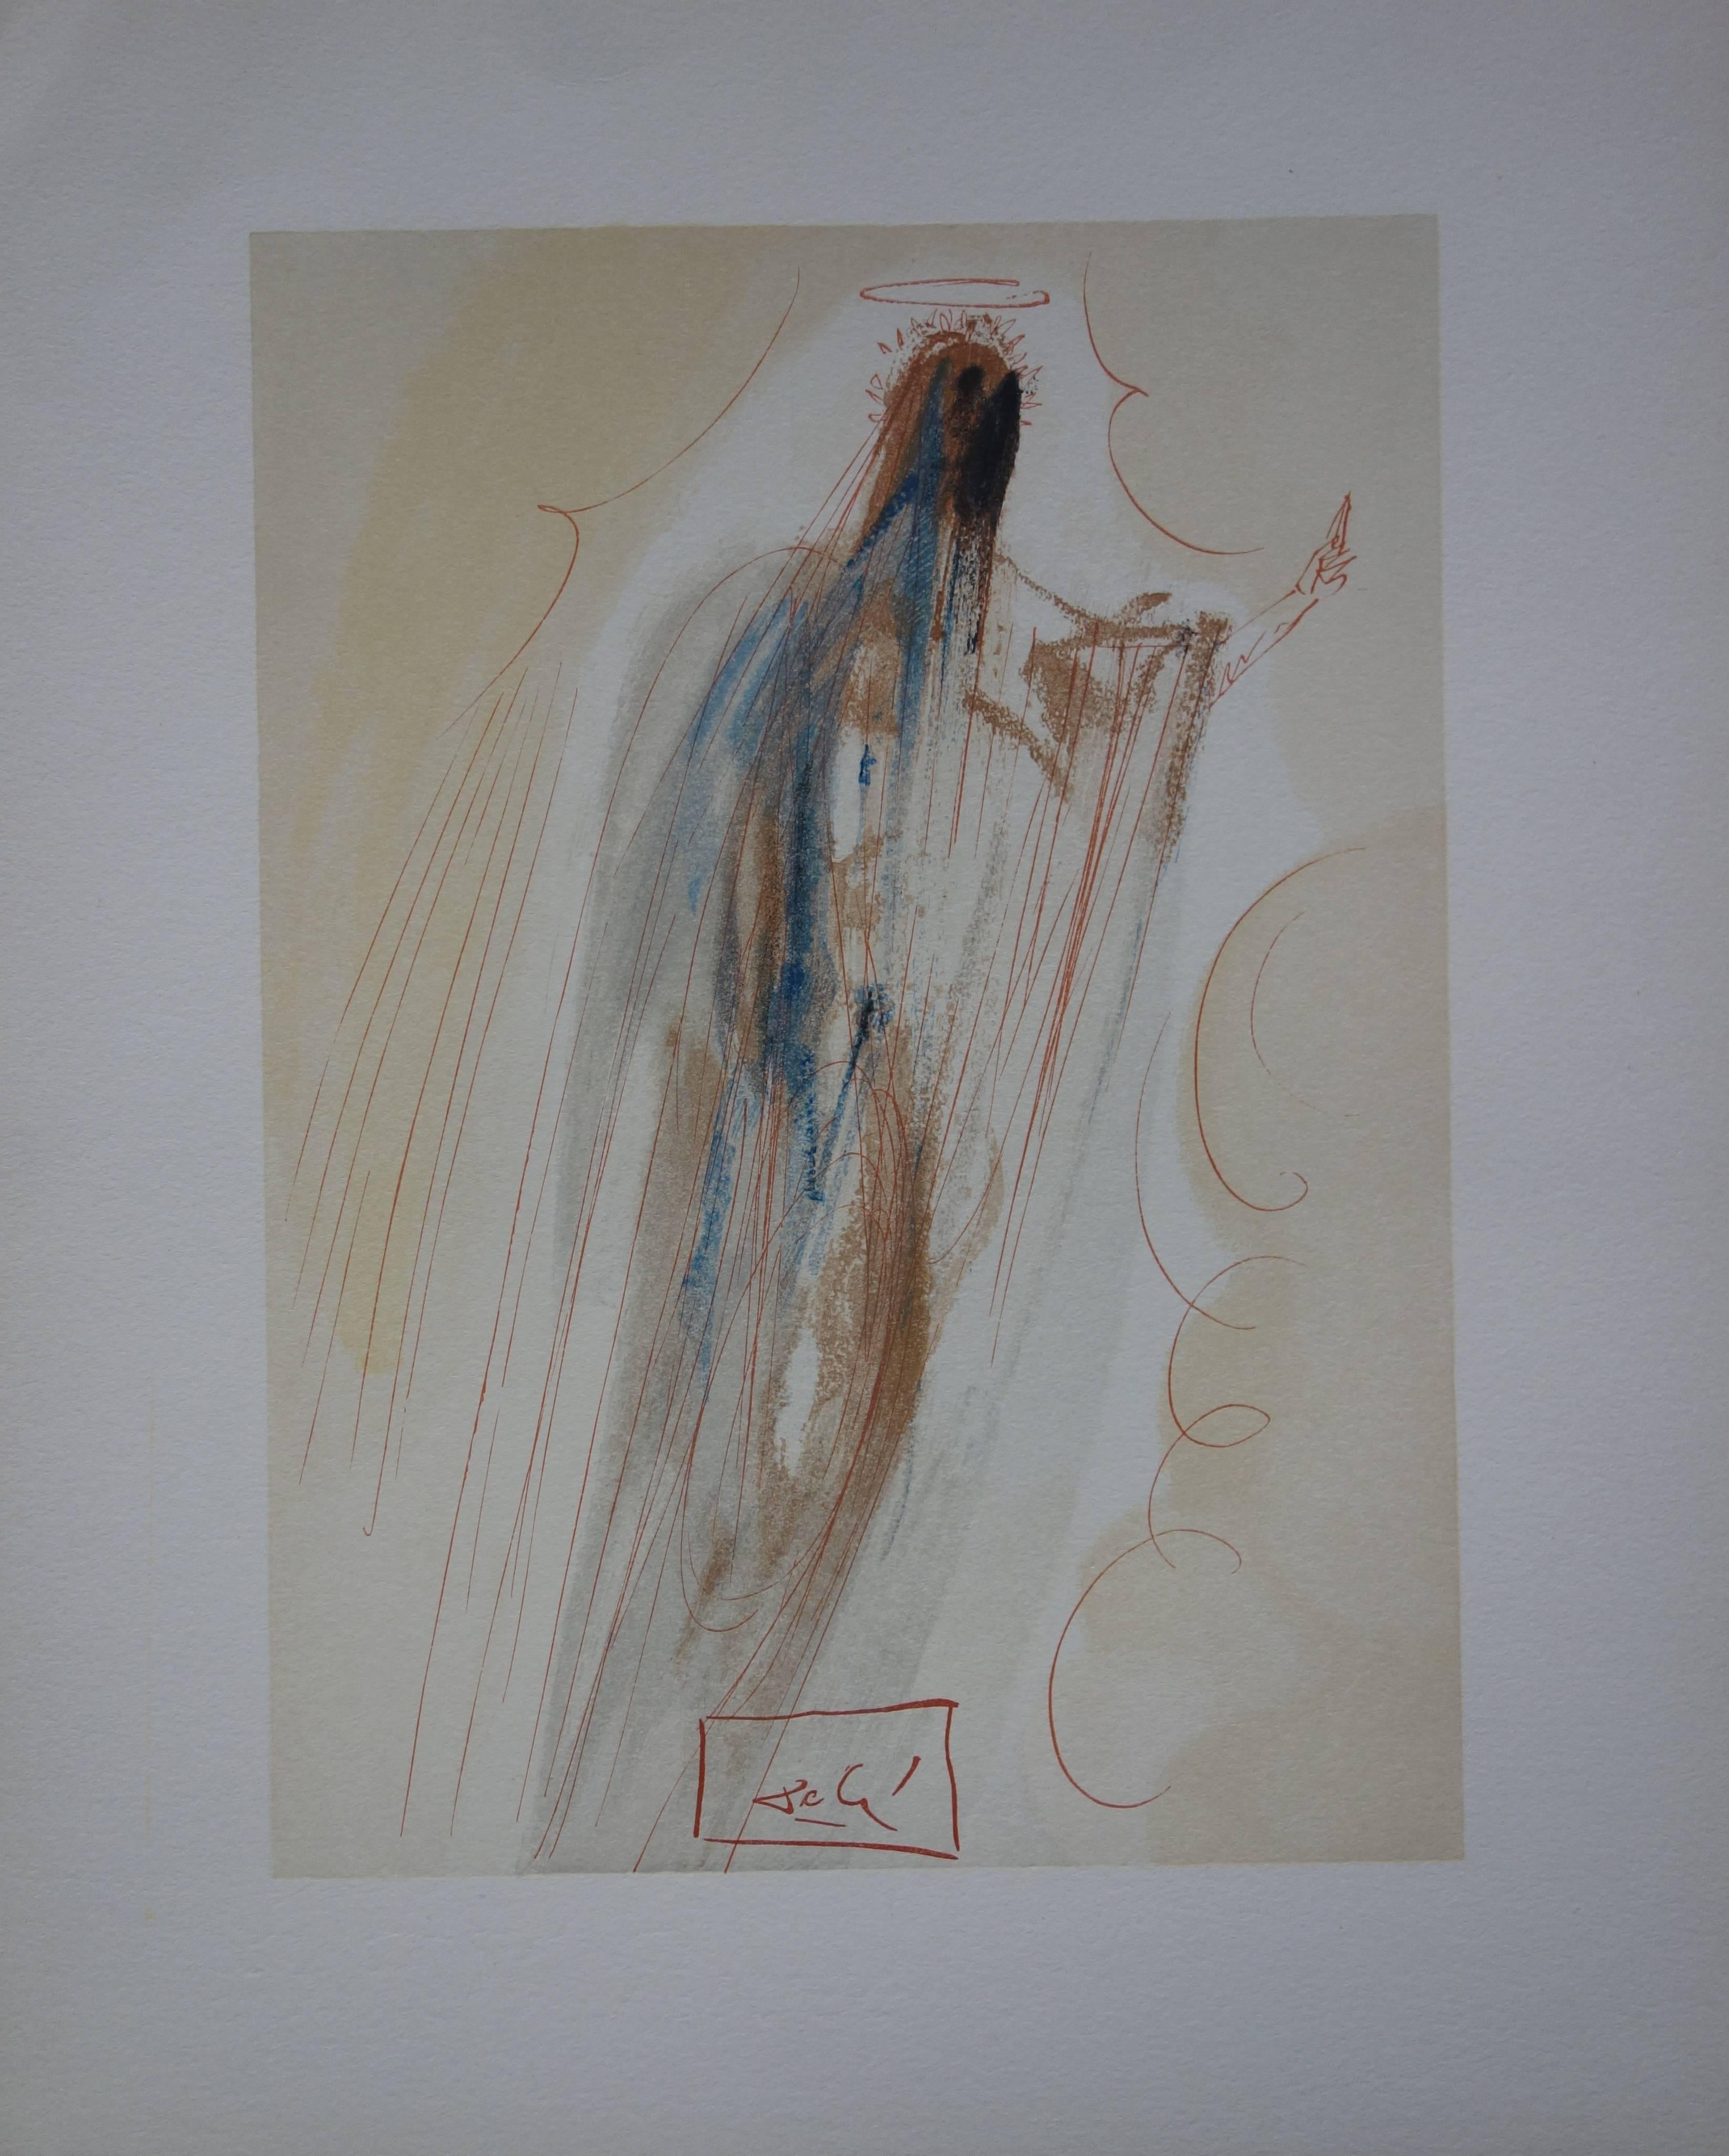 Salvador Dalí Figurative Print - Heaven 29 - The Creation of Angels - Color woodcut print - 1963